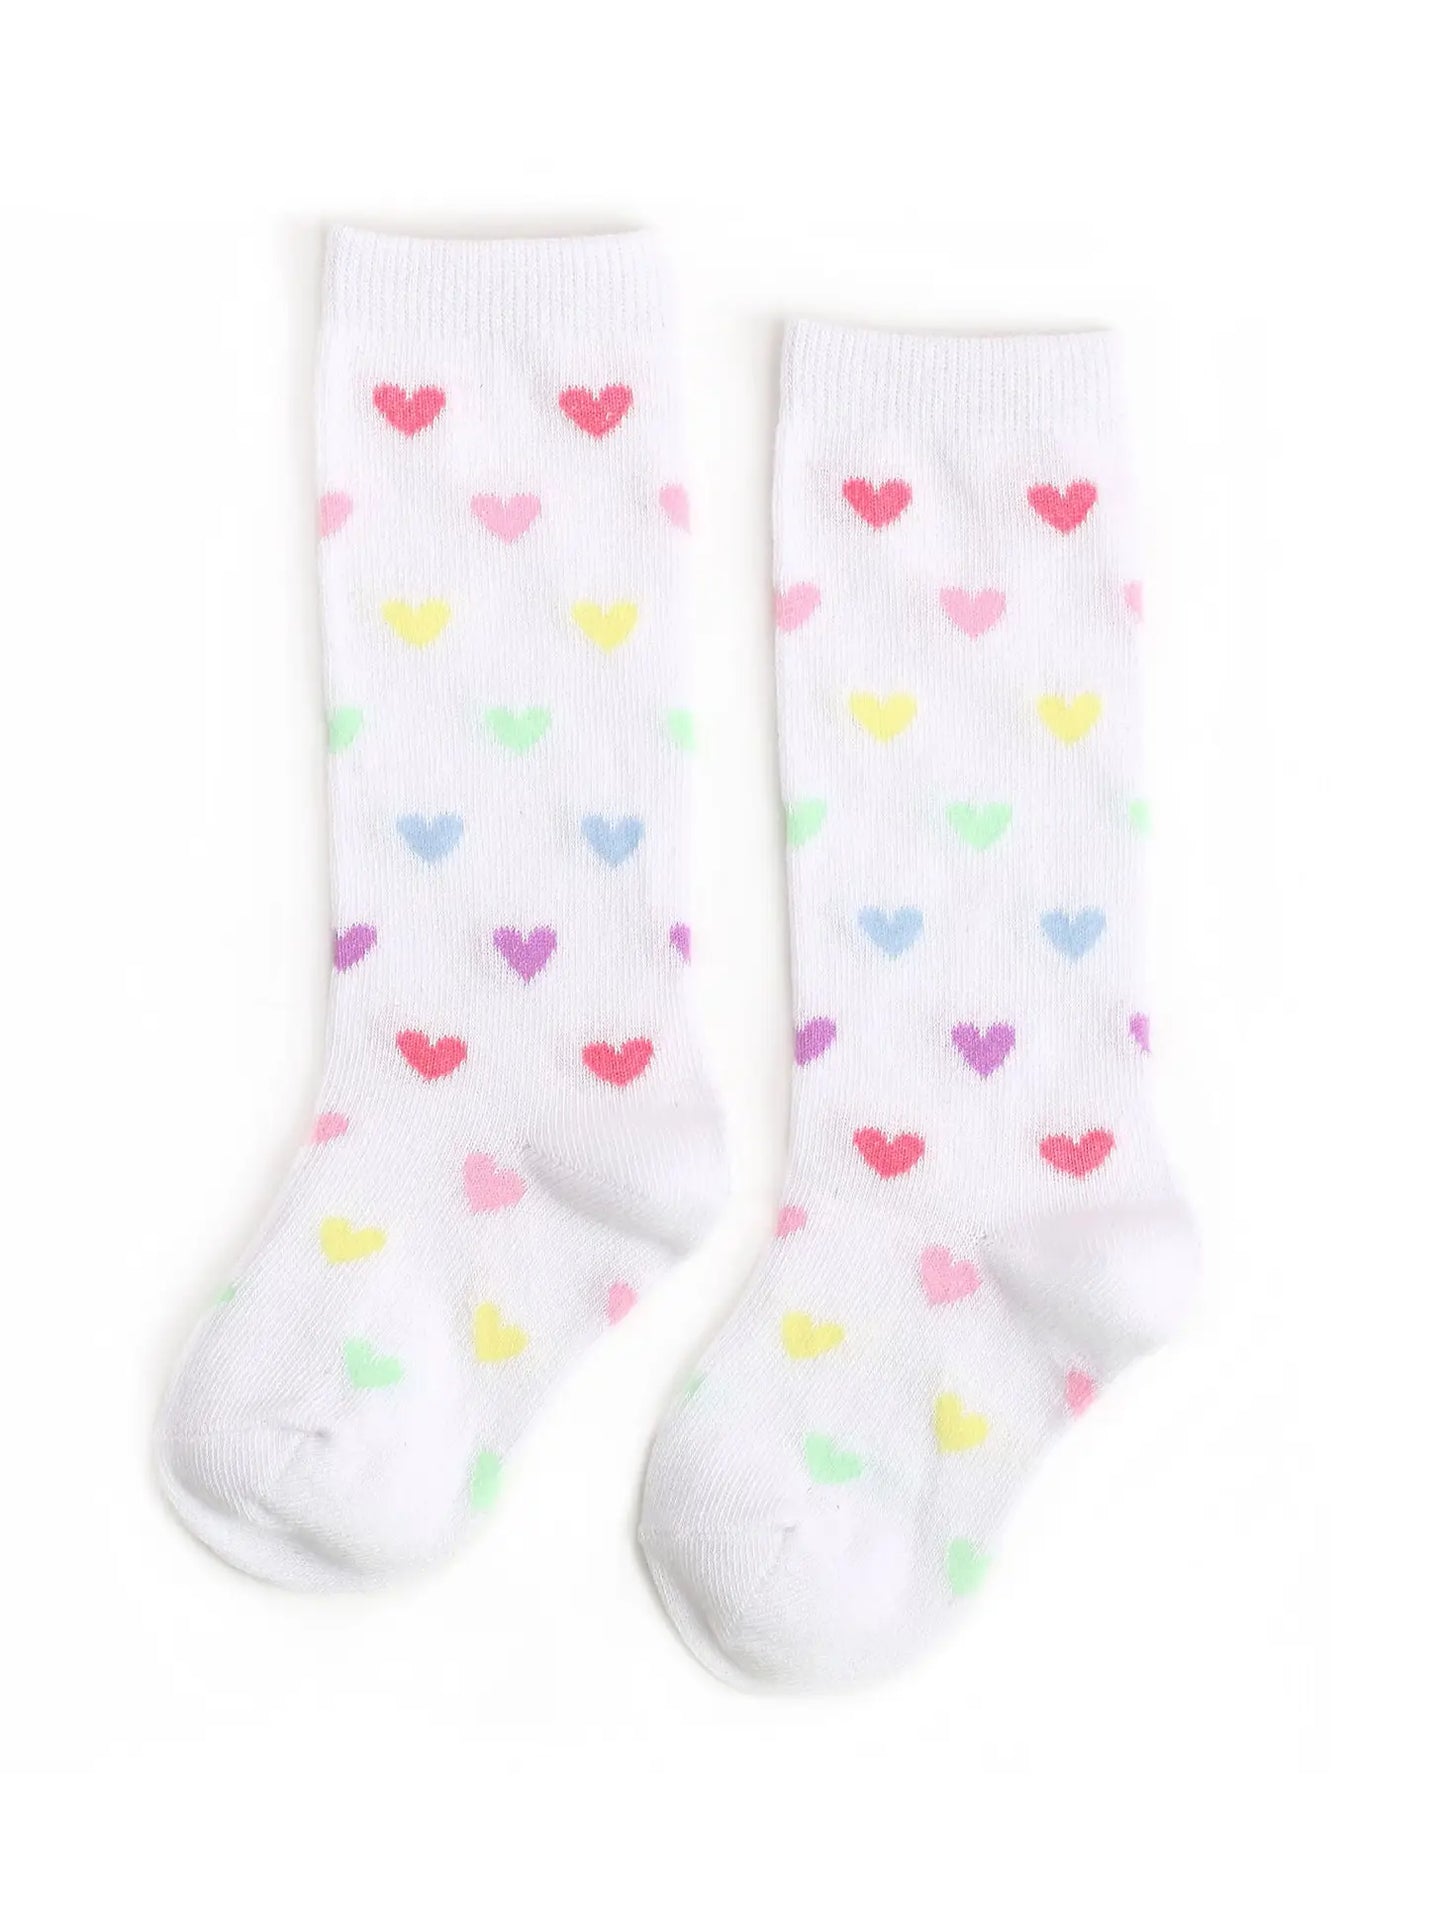 Sweetheart Knee High Socks - Little Stocking Company